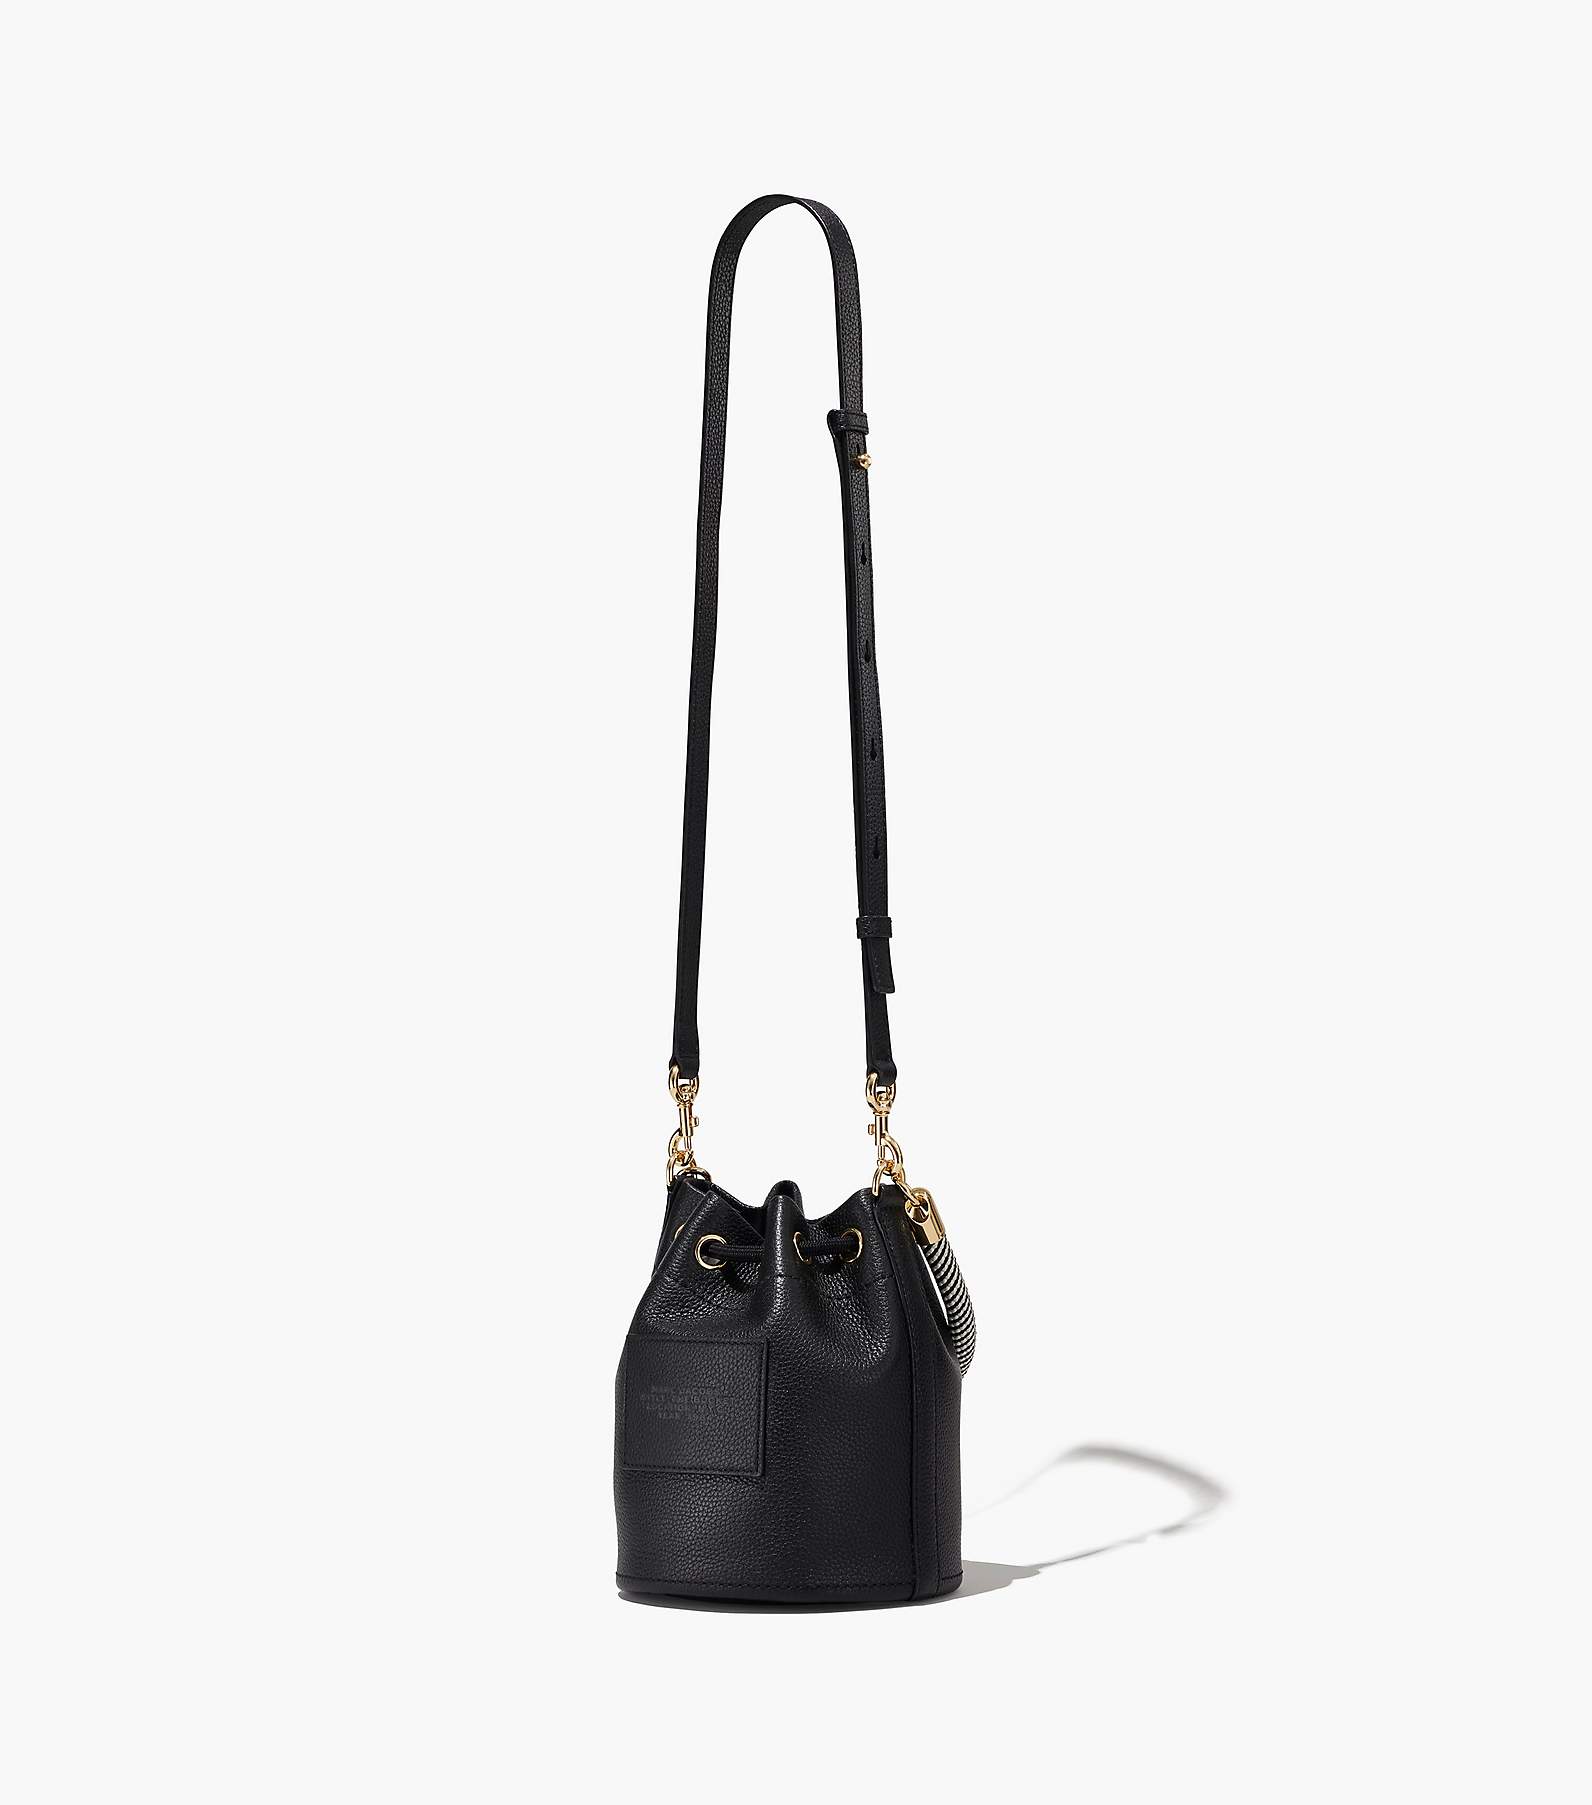 Mini Bucket Bag Studded Decor Drawstring For Daily, Clear Bag